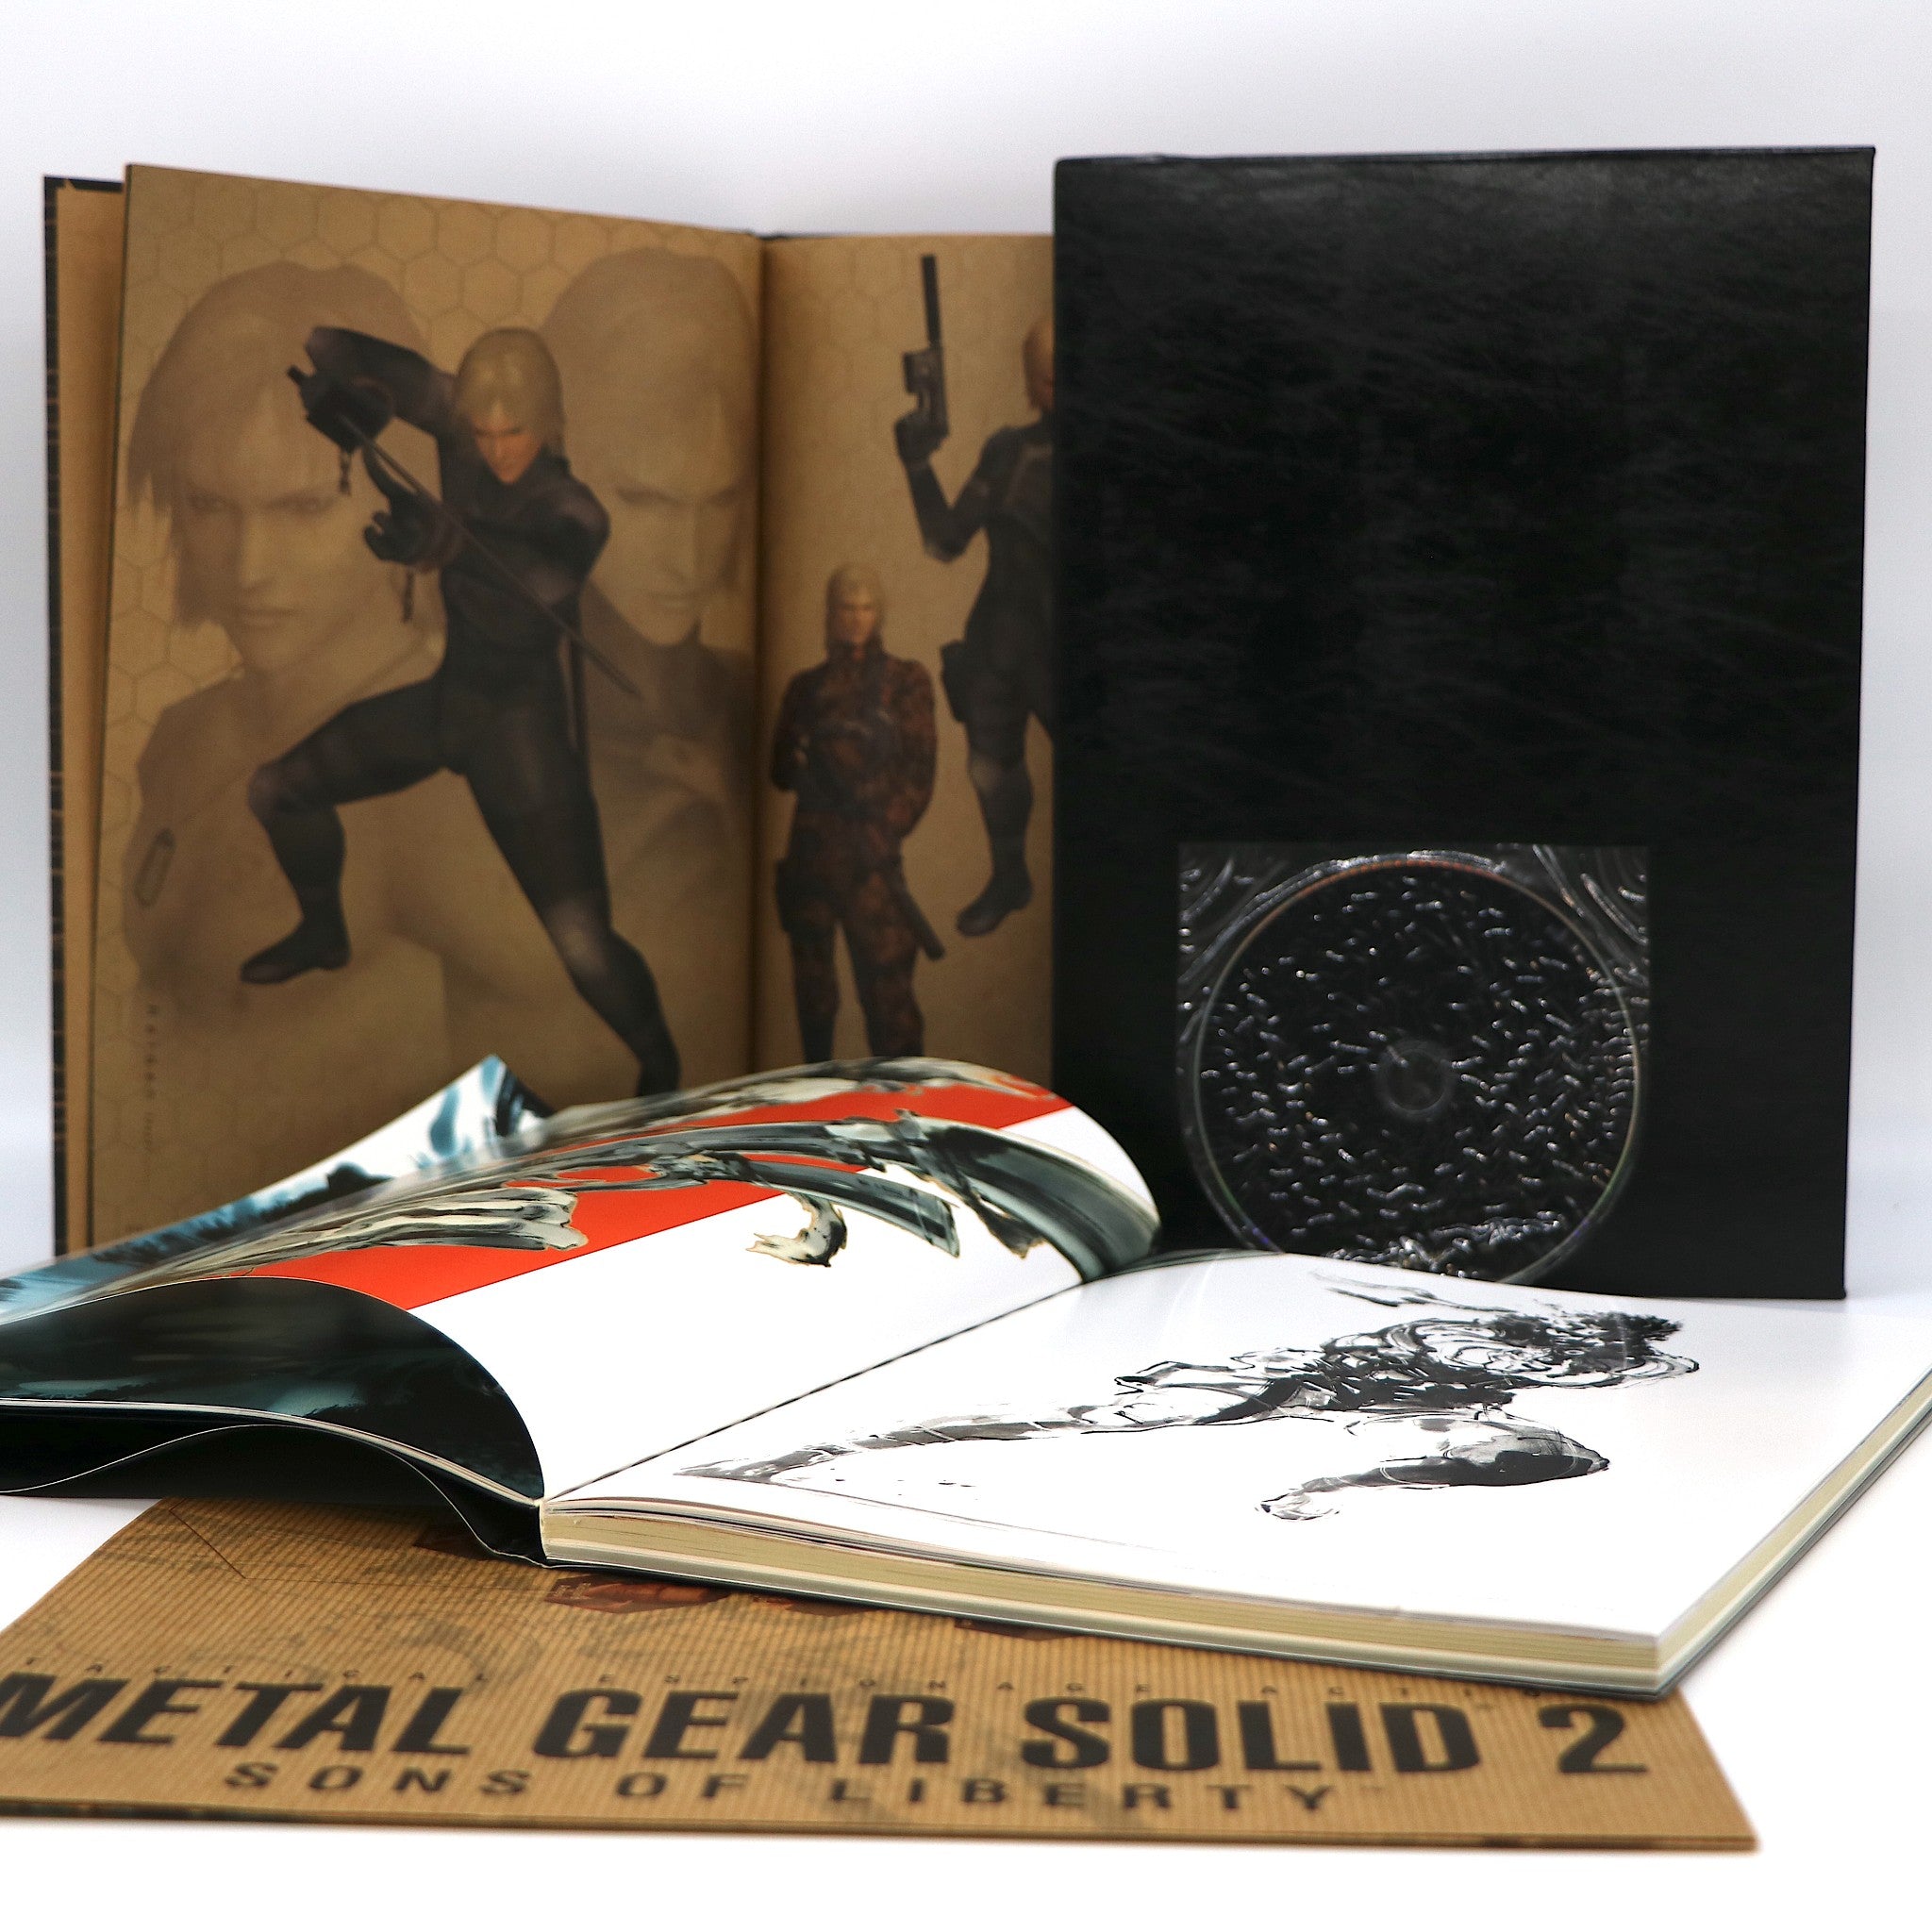 Metal Gear Solid 2 Yoji Shinkawa Konami Style Art Books With Poster & DVD - New!